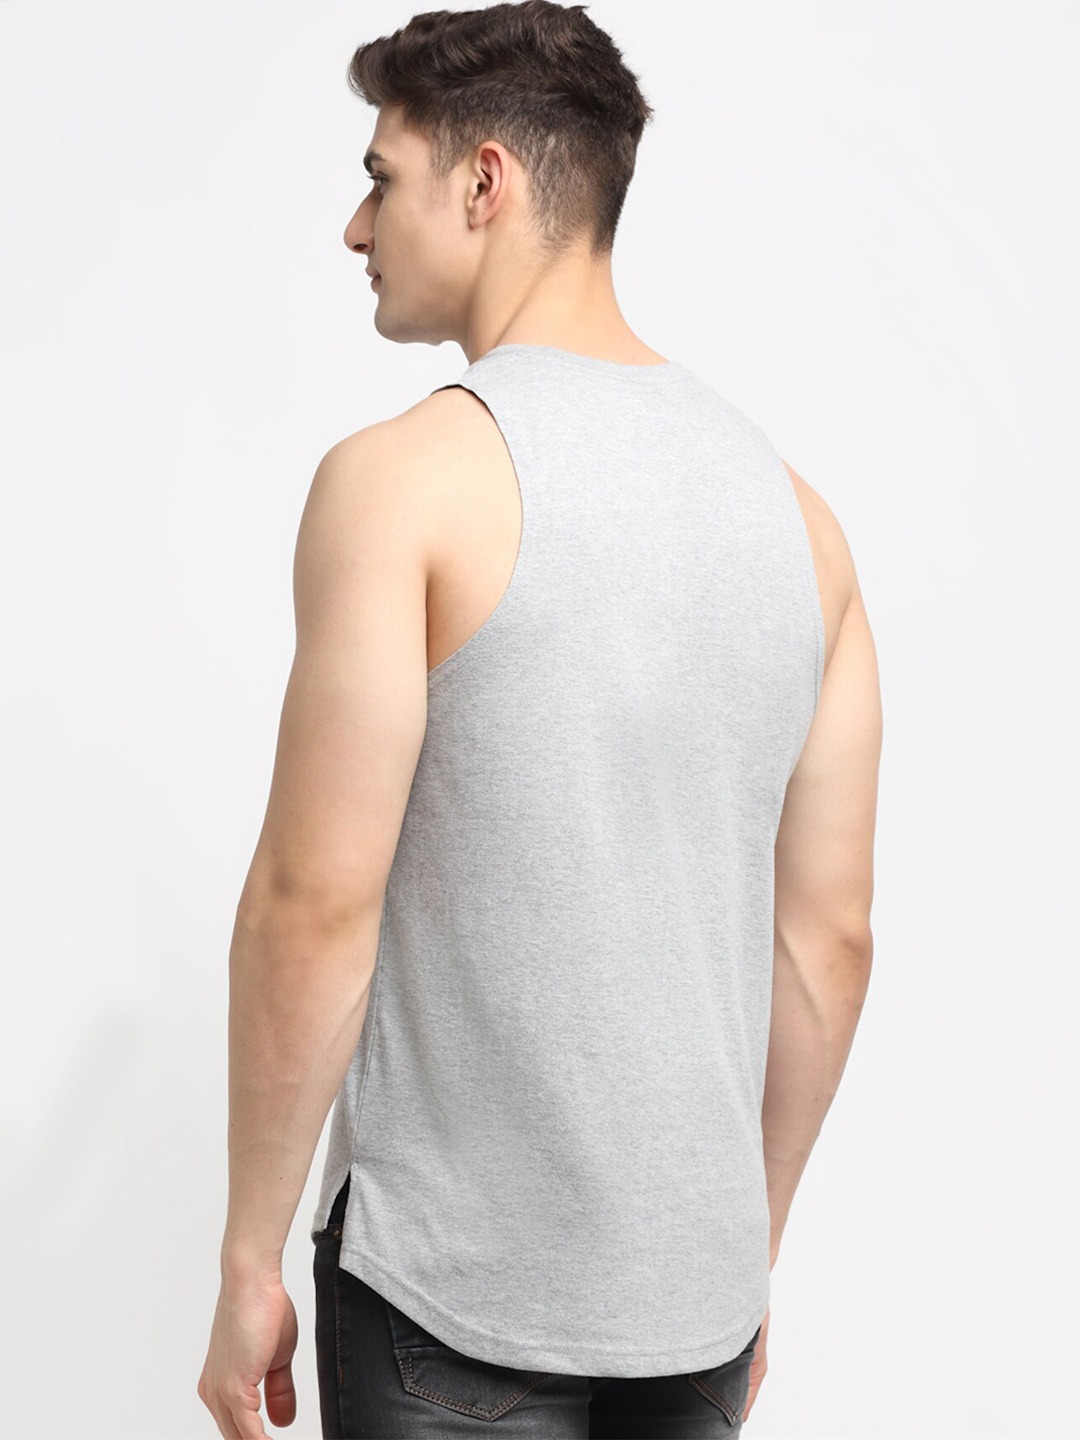 Clothing Innerwear Vests | Friskers Men Grey Printed Cotton Innerwear Vests - ZT76596